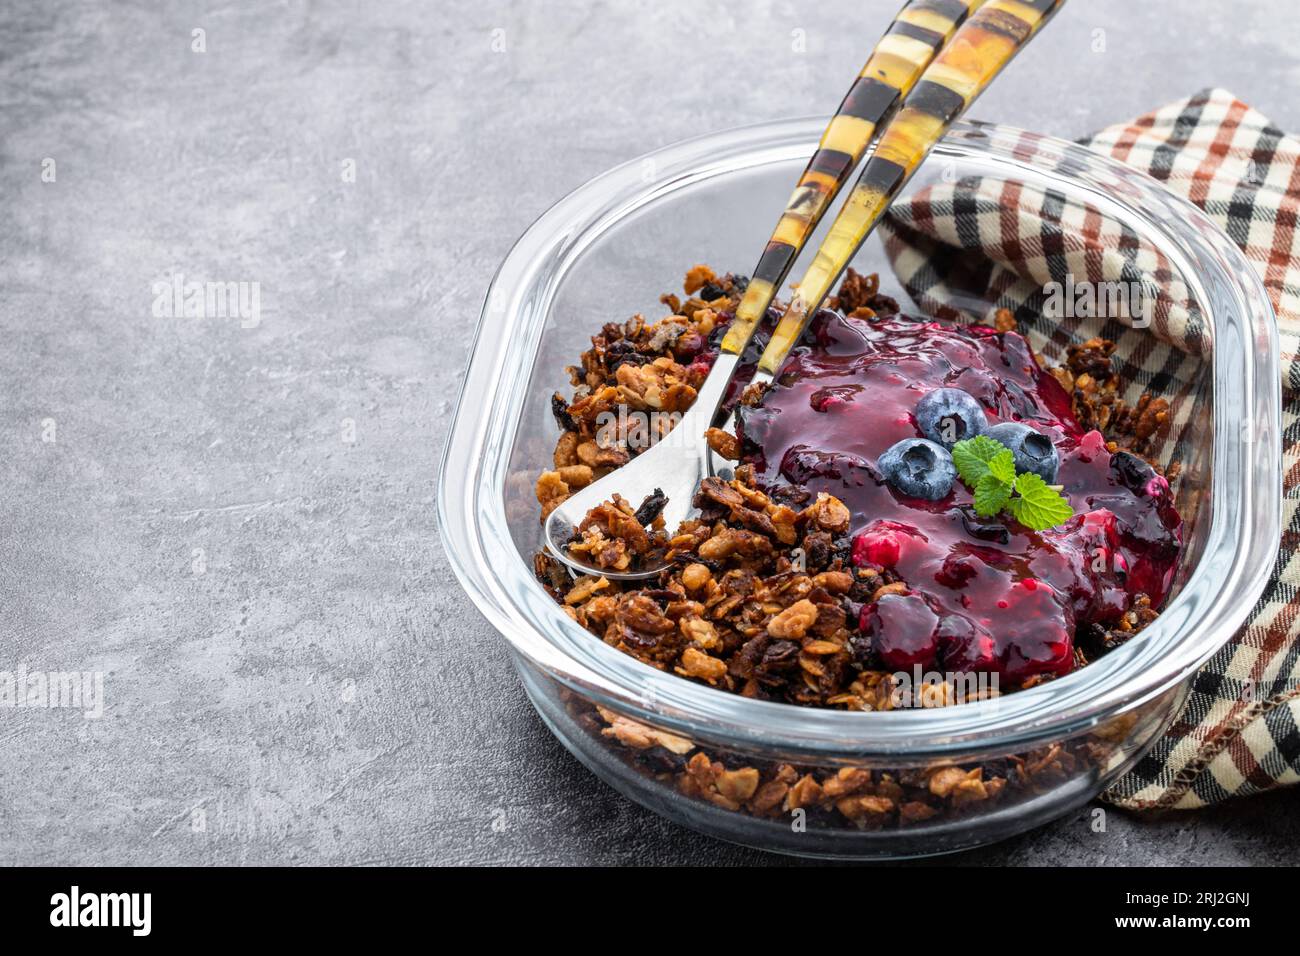 Blueberry  crisp baked oatmeal on gray background Stock Photo